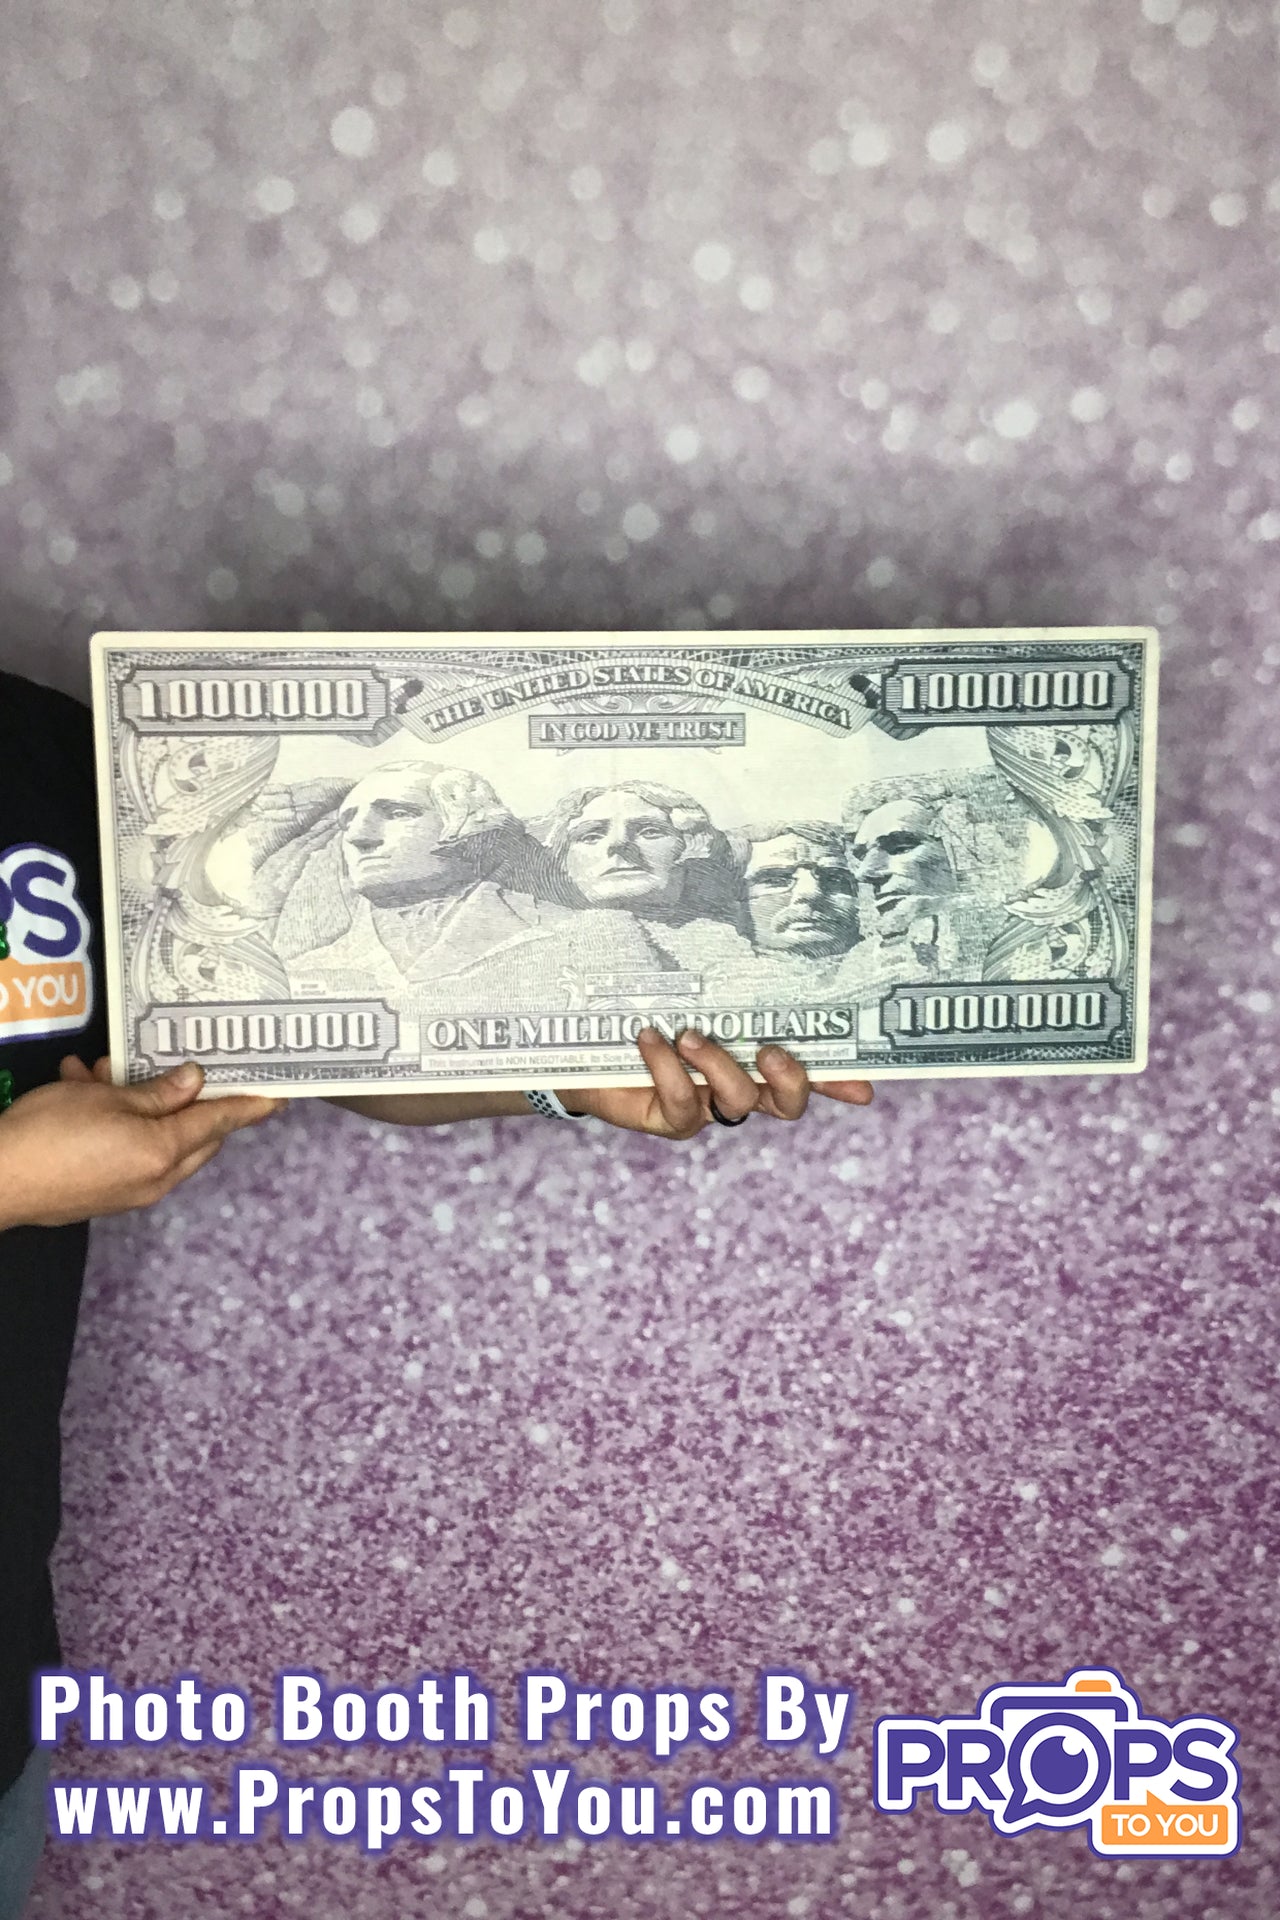 HUGE Props: Money! Million Dollar Bill Photo Booth Prop